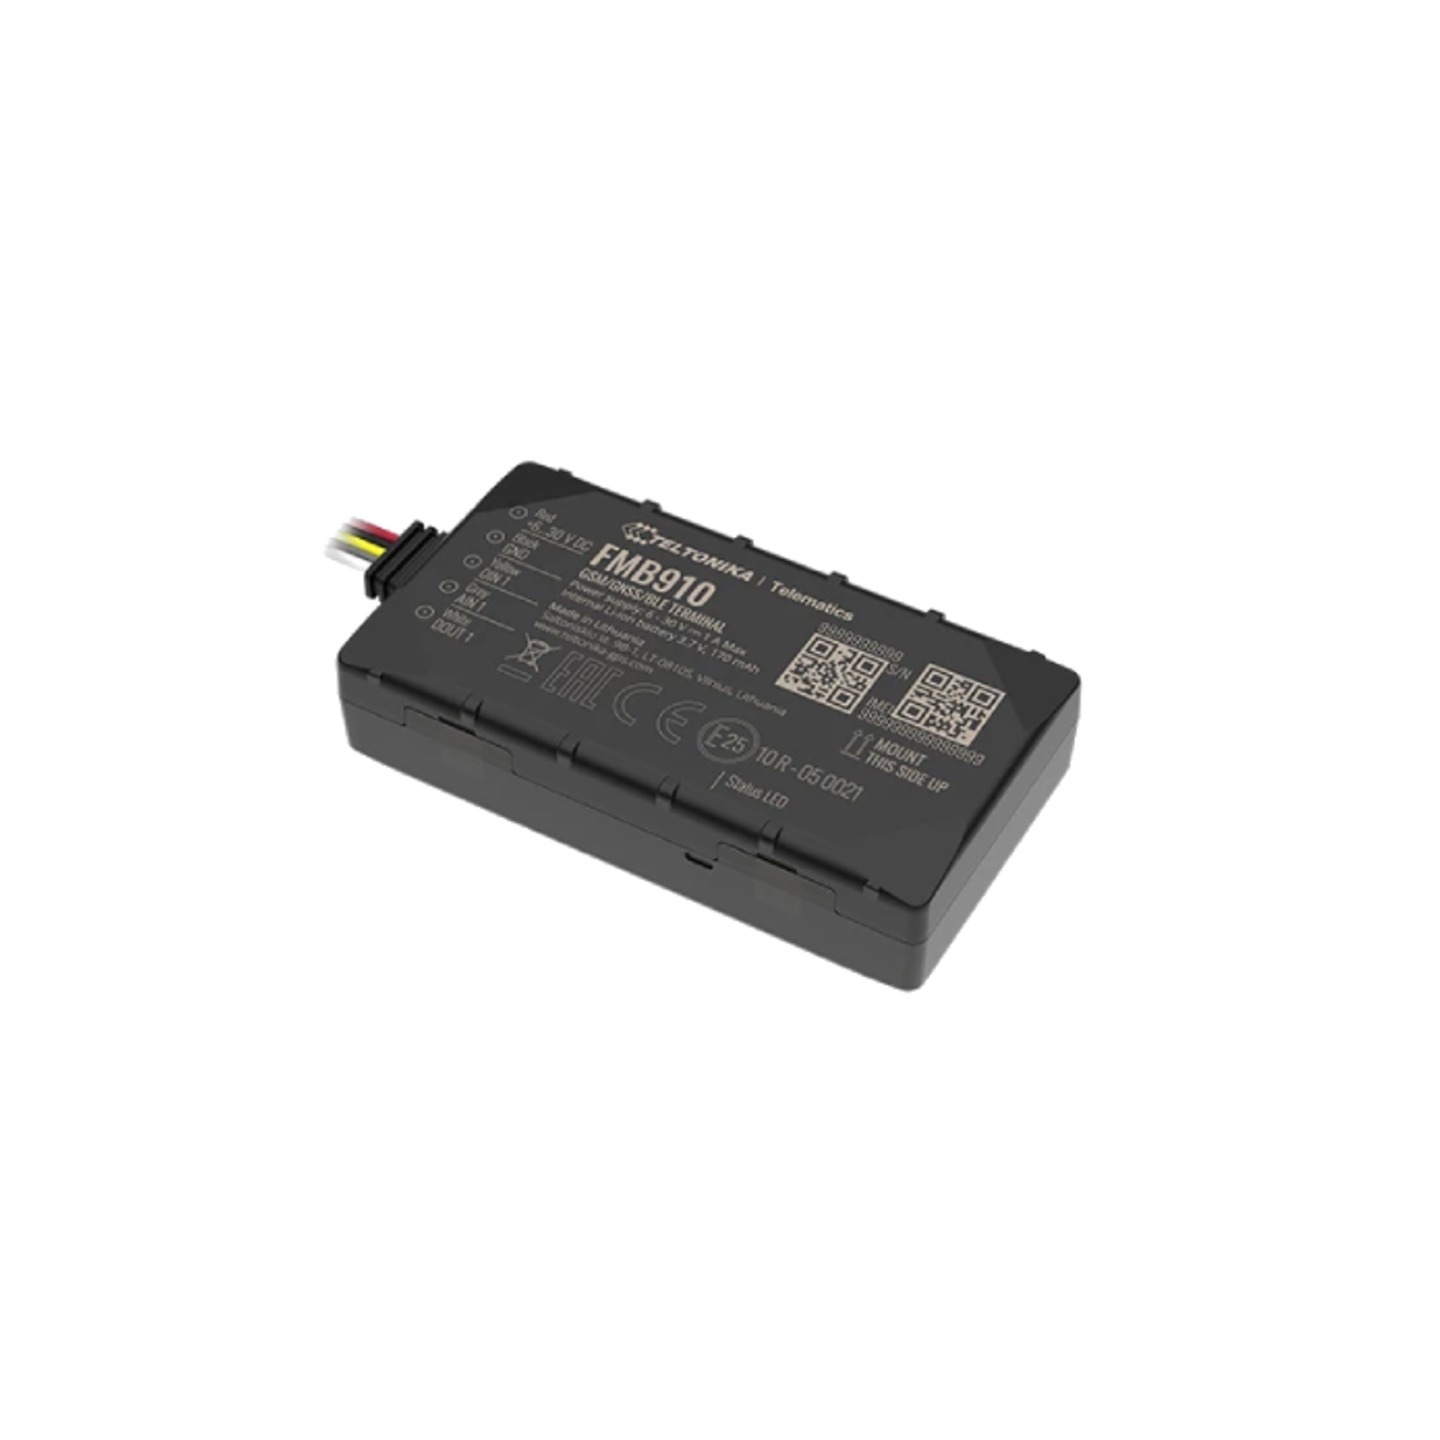 FMB-910 Smart GPS  Tracker - Internal Backup Battery